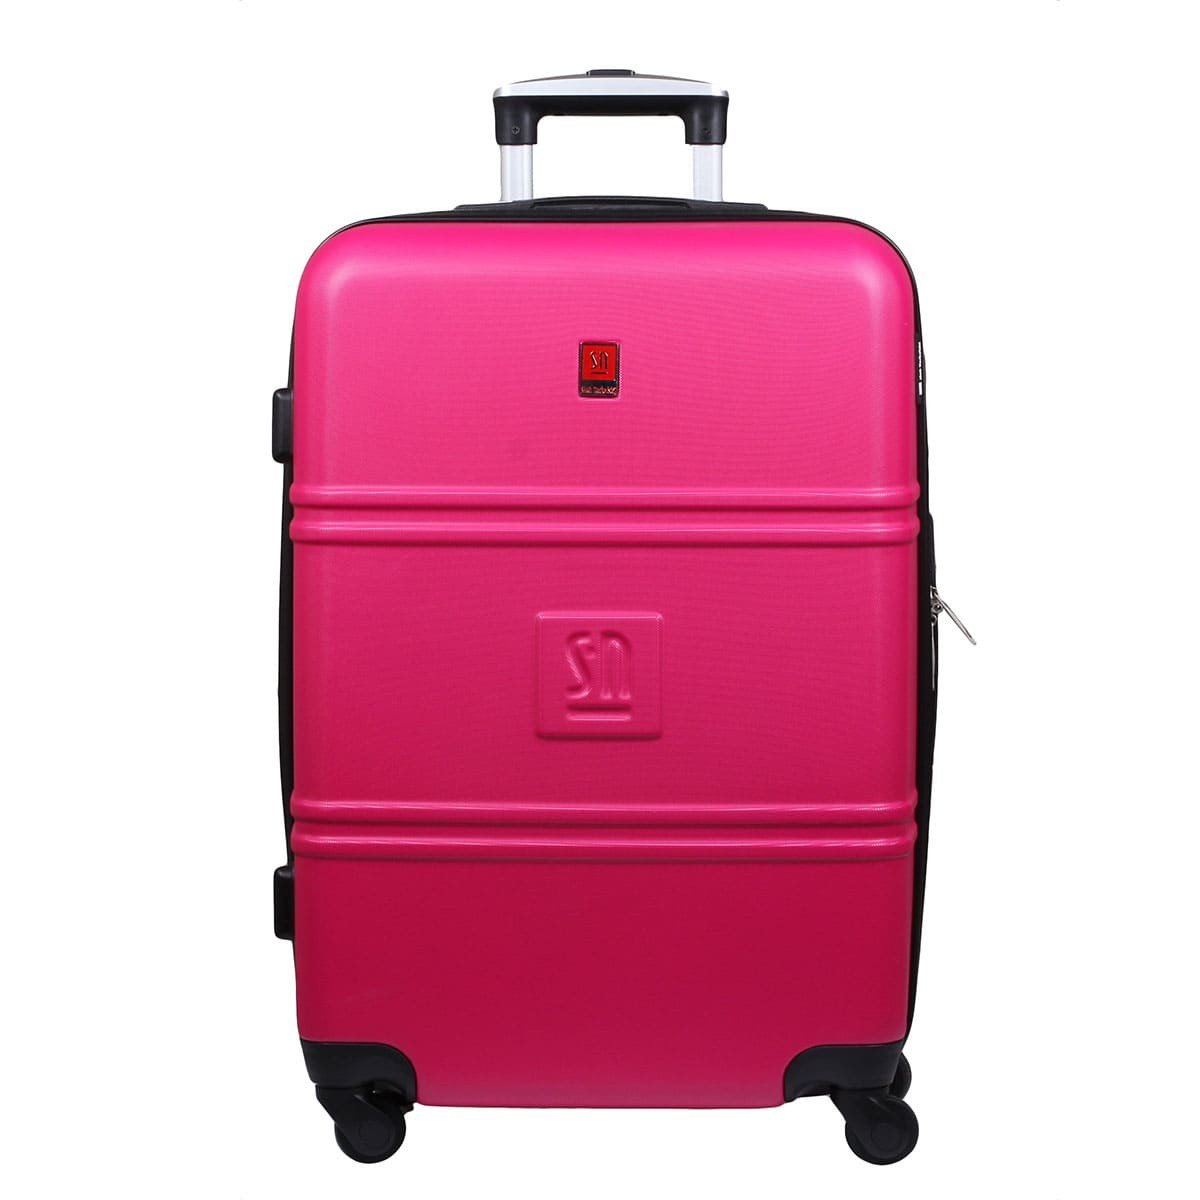 rozowa-walizka-podrozna-srednia-na-kolkach-Art-Class-04-0411O-09.jpg